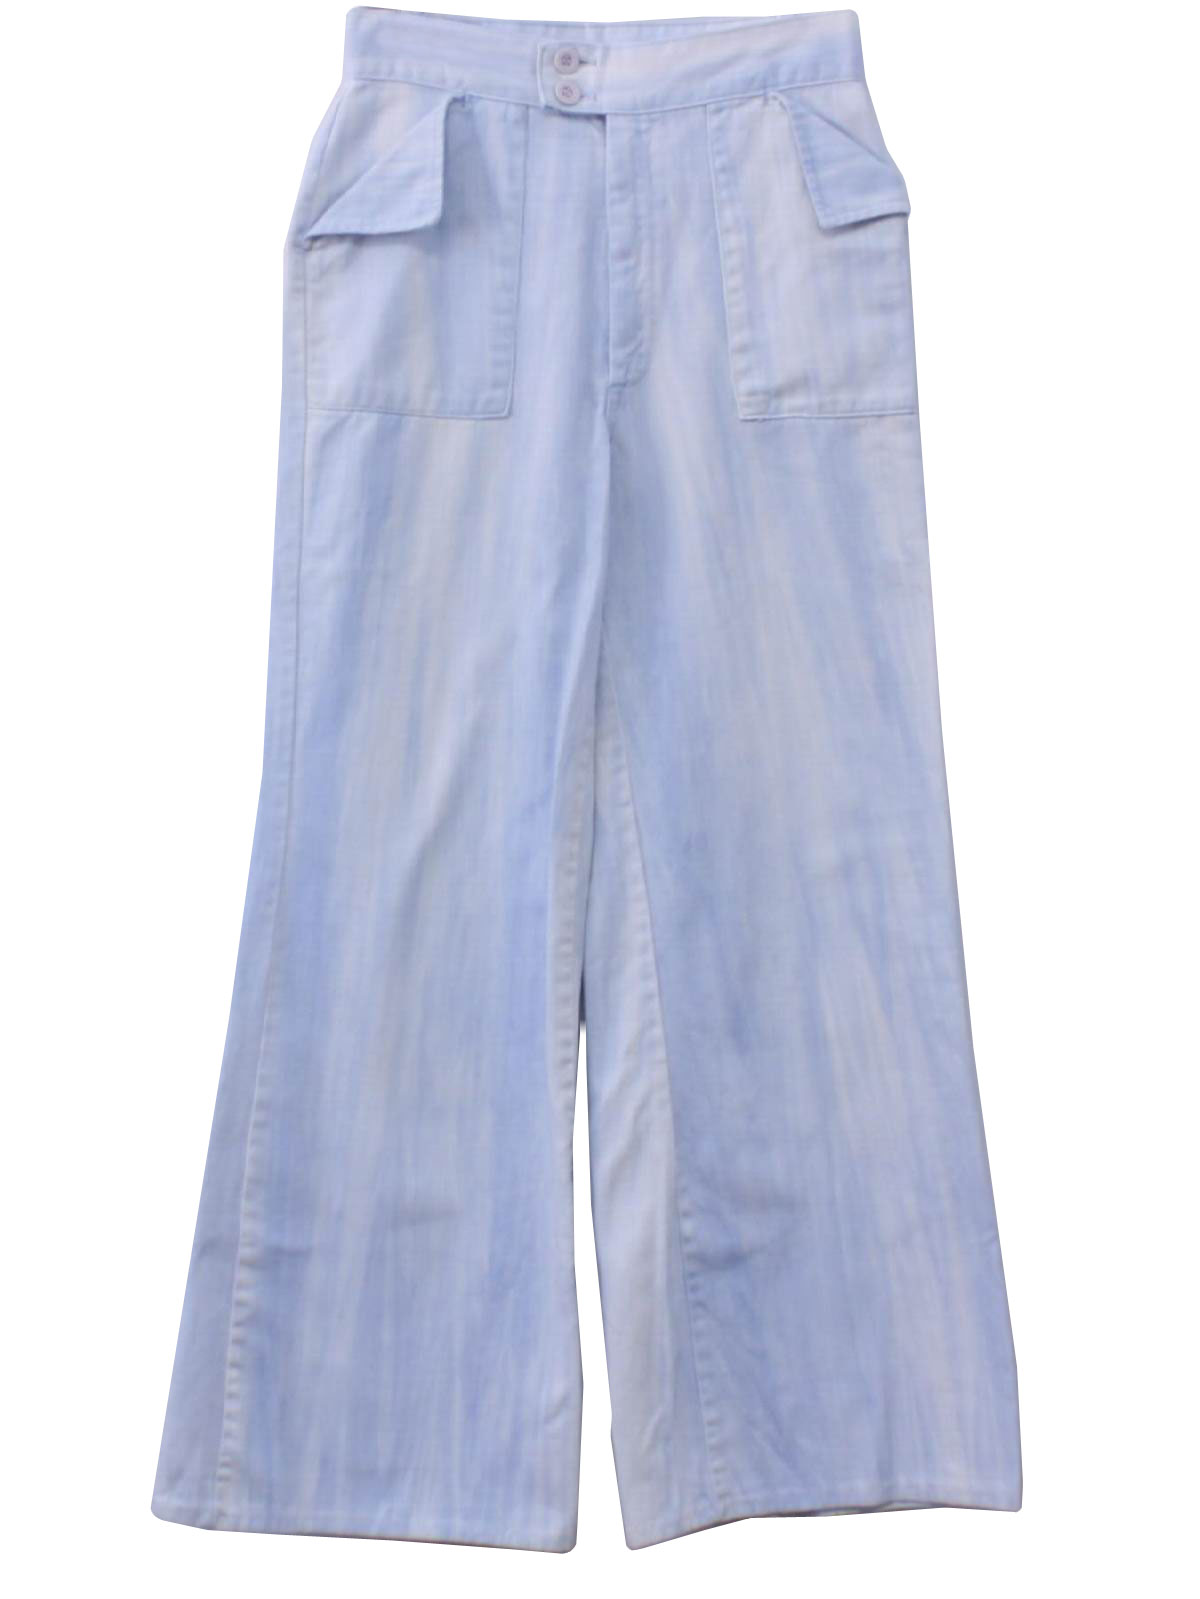 Vintage JC Penney Fashions 70's Bellbottom Pants: 70s -JC Penney ...